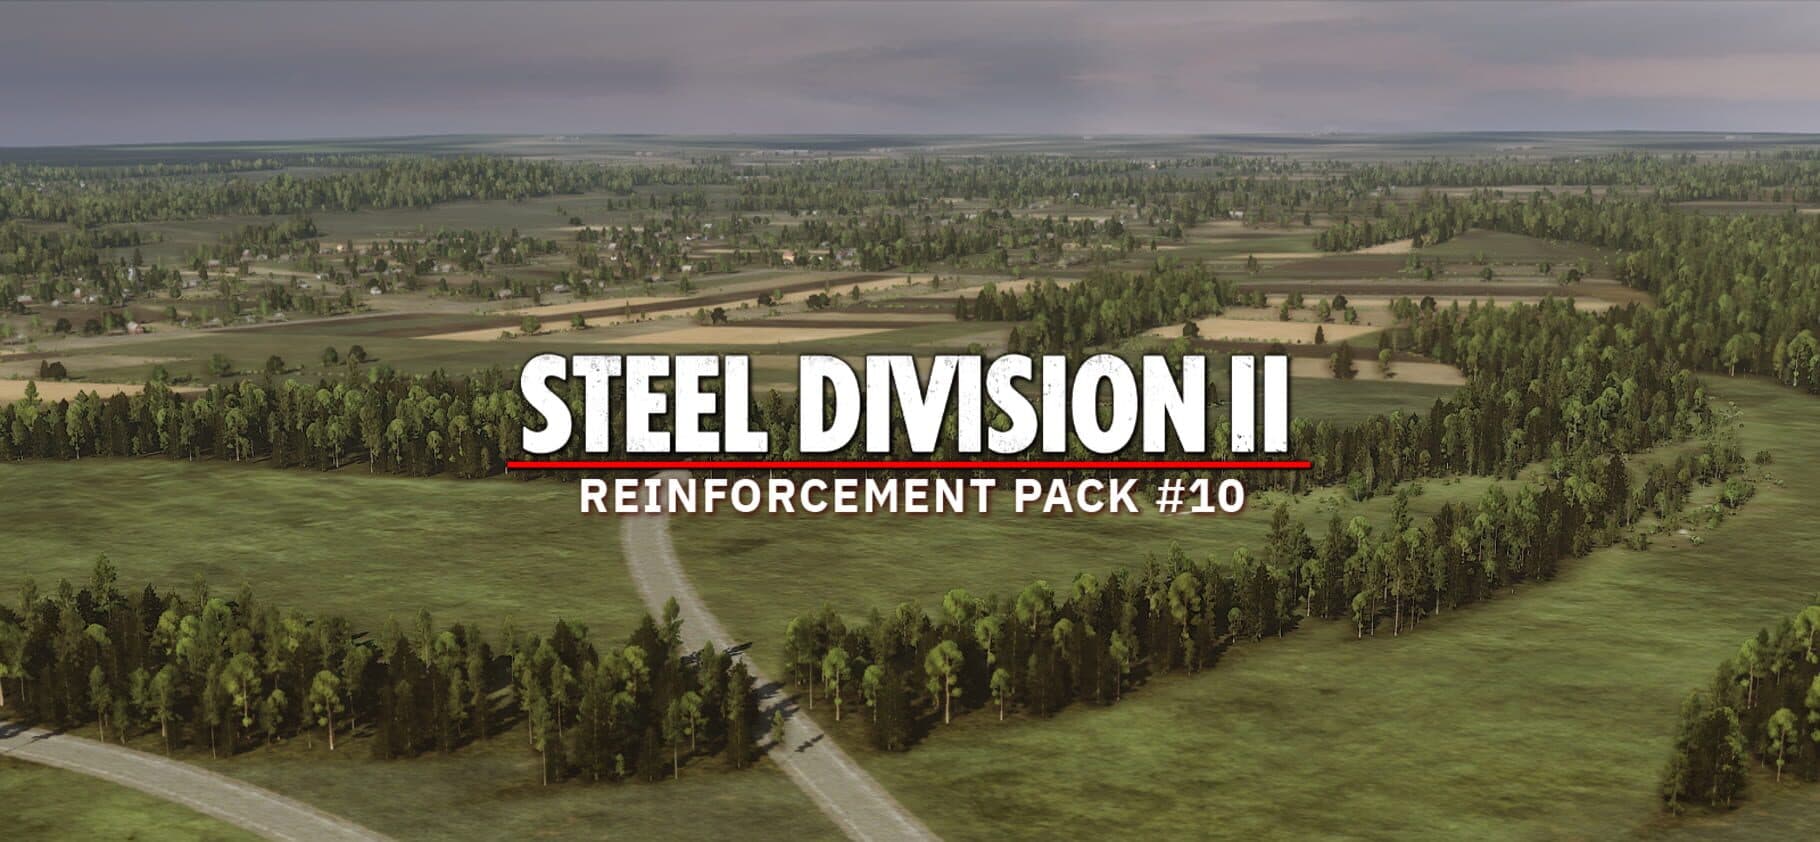 Steel Division 2: Reinforcement Pack #10 - Tannenberg Image